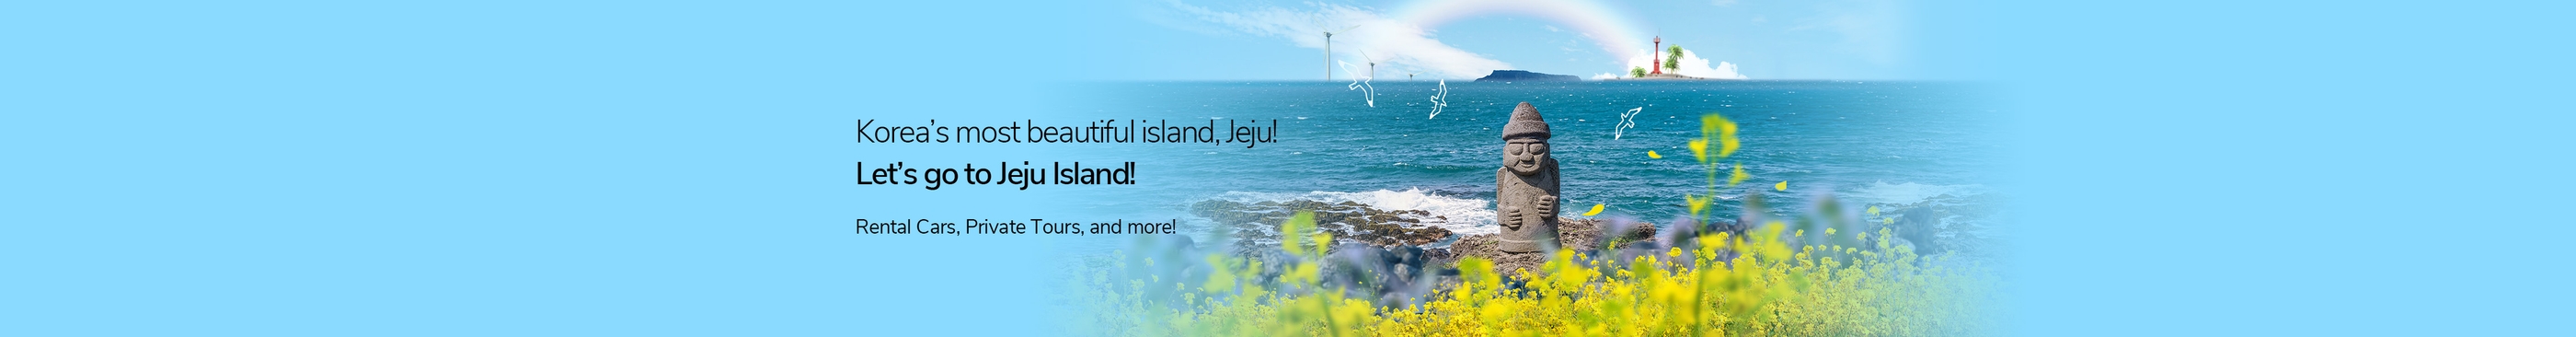 Korea’s most beautiful island, Jeju!